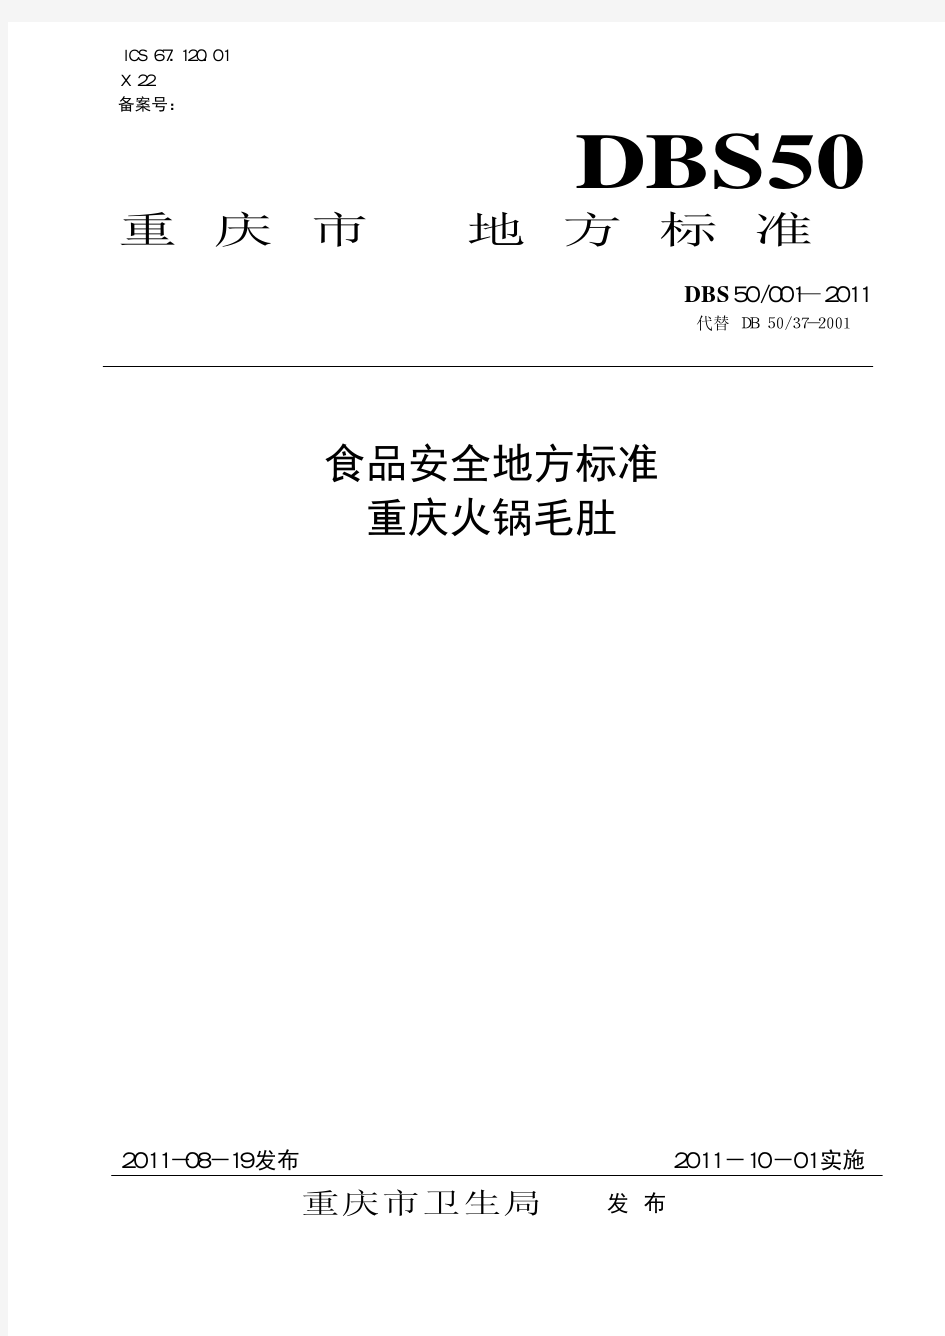 DBS50 001-2011 食品安全地方标准 重庆火锅毛肚